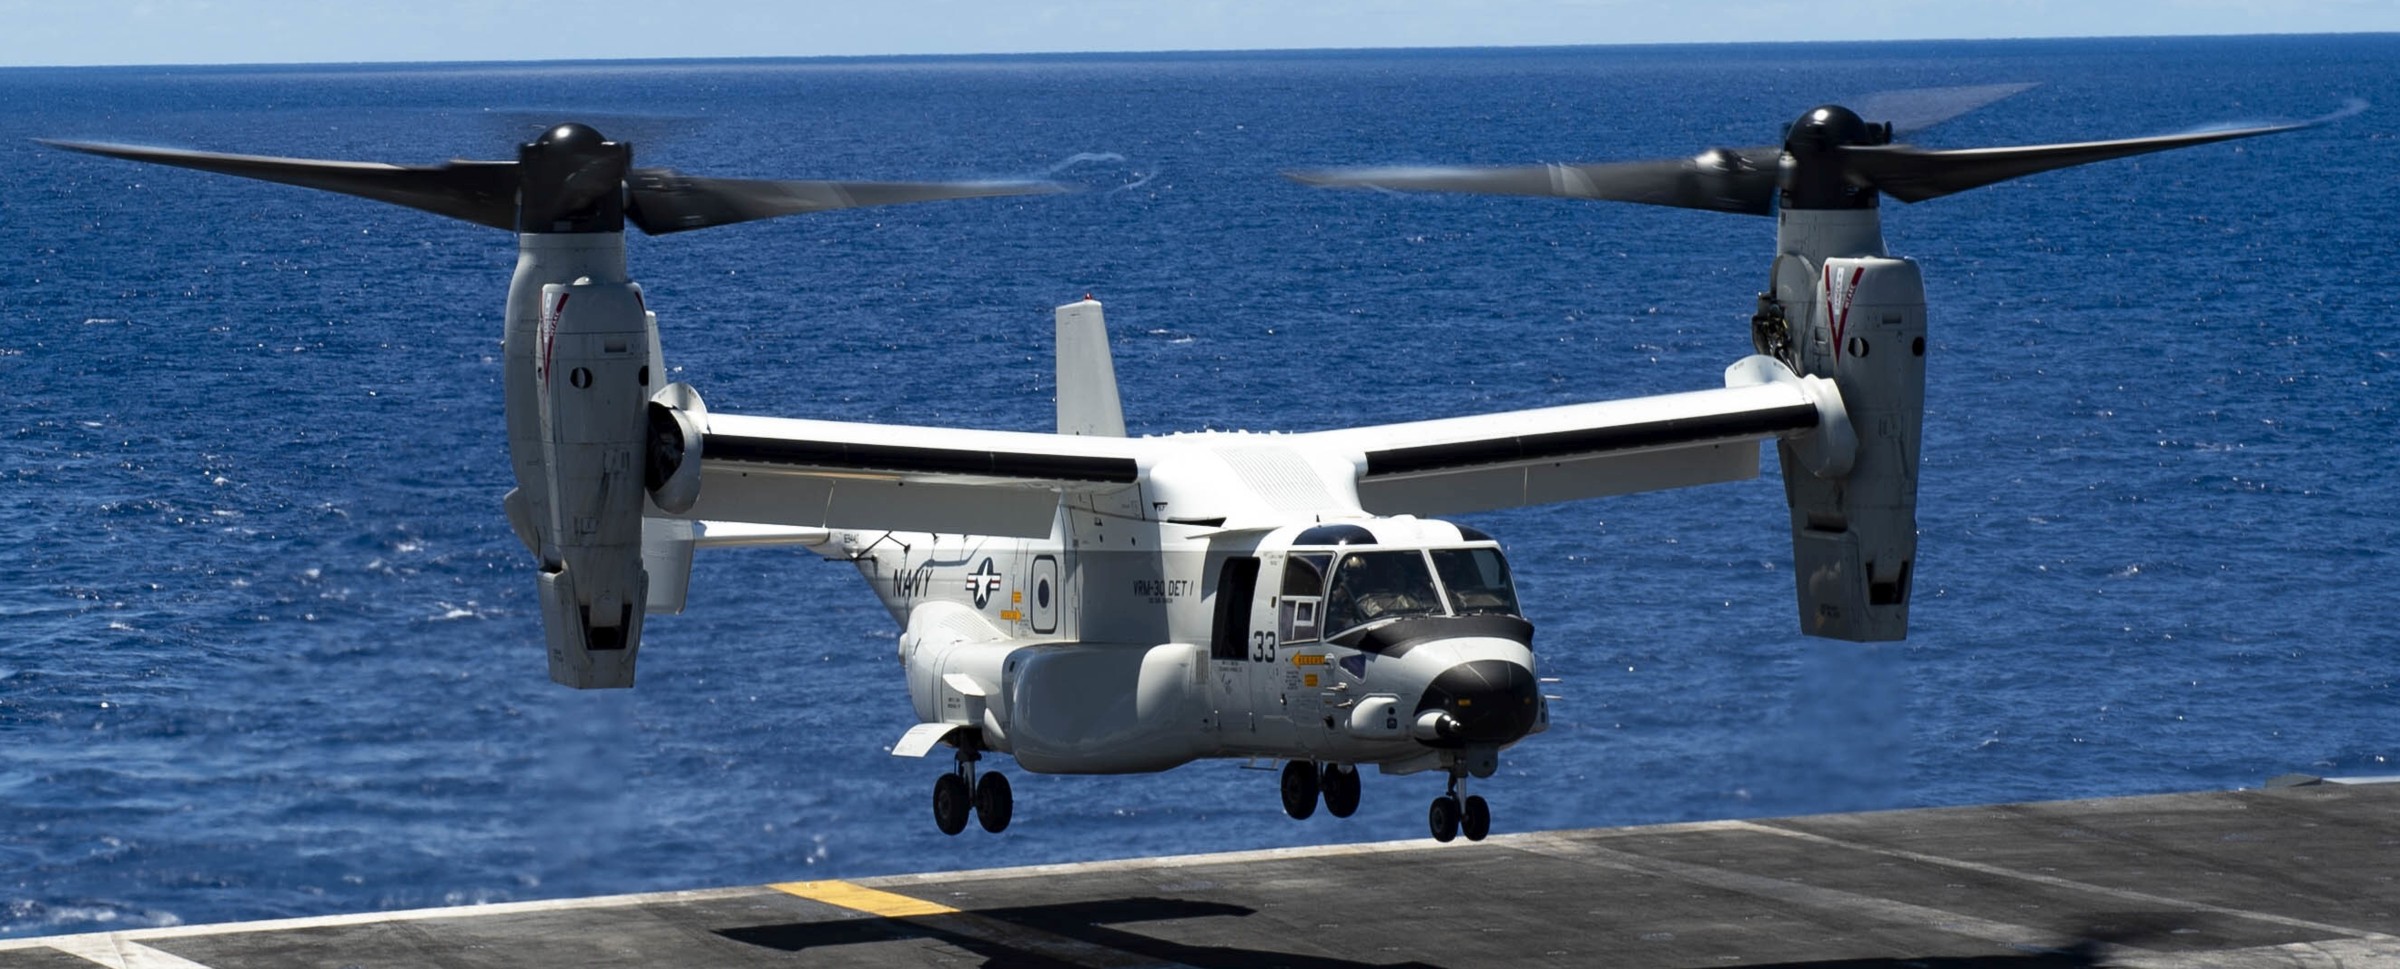 vrm-30 titans fleet logistics multi mission squadron us navy bell boeing cmv-22b osprey uss carl vinson cvn-70 40